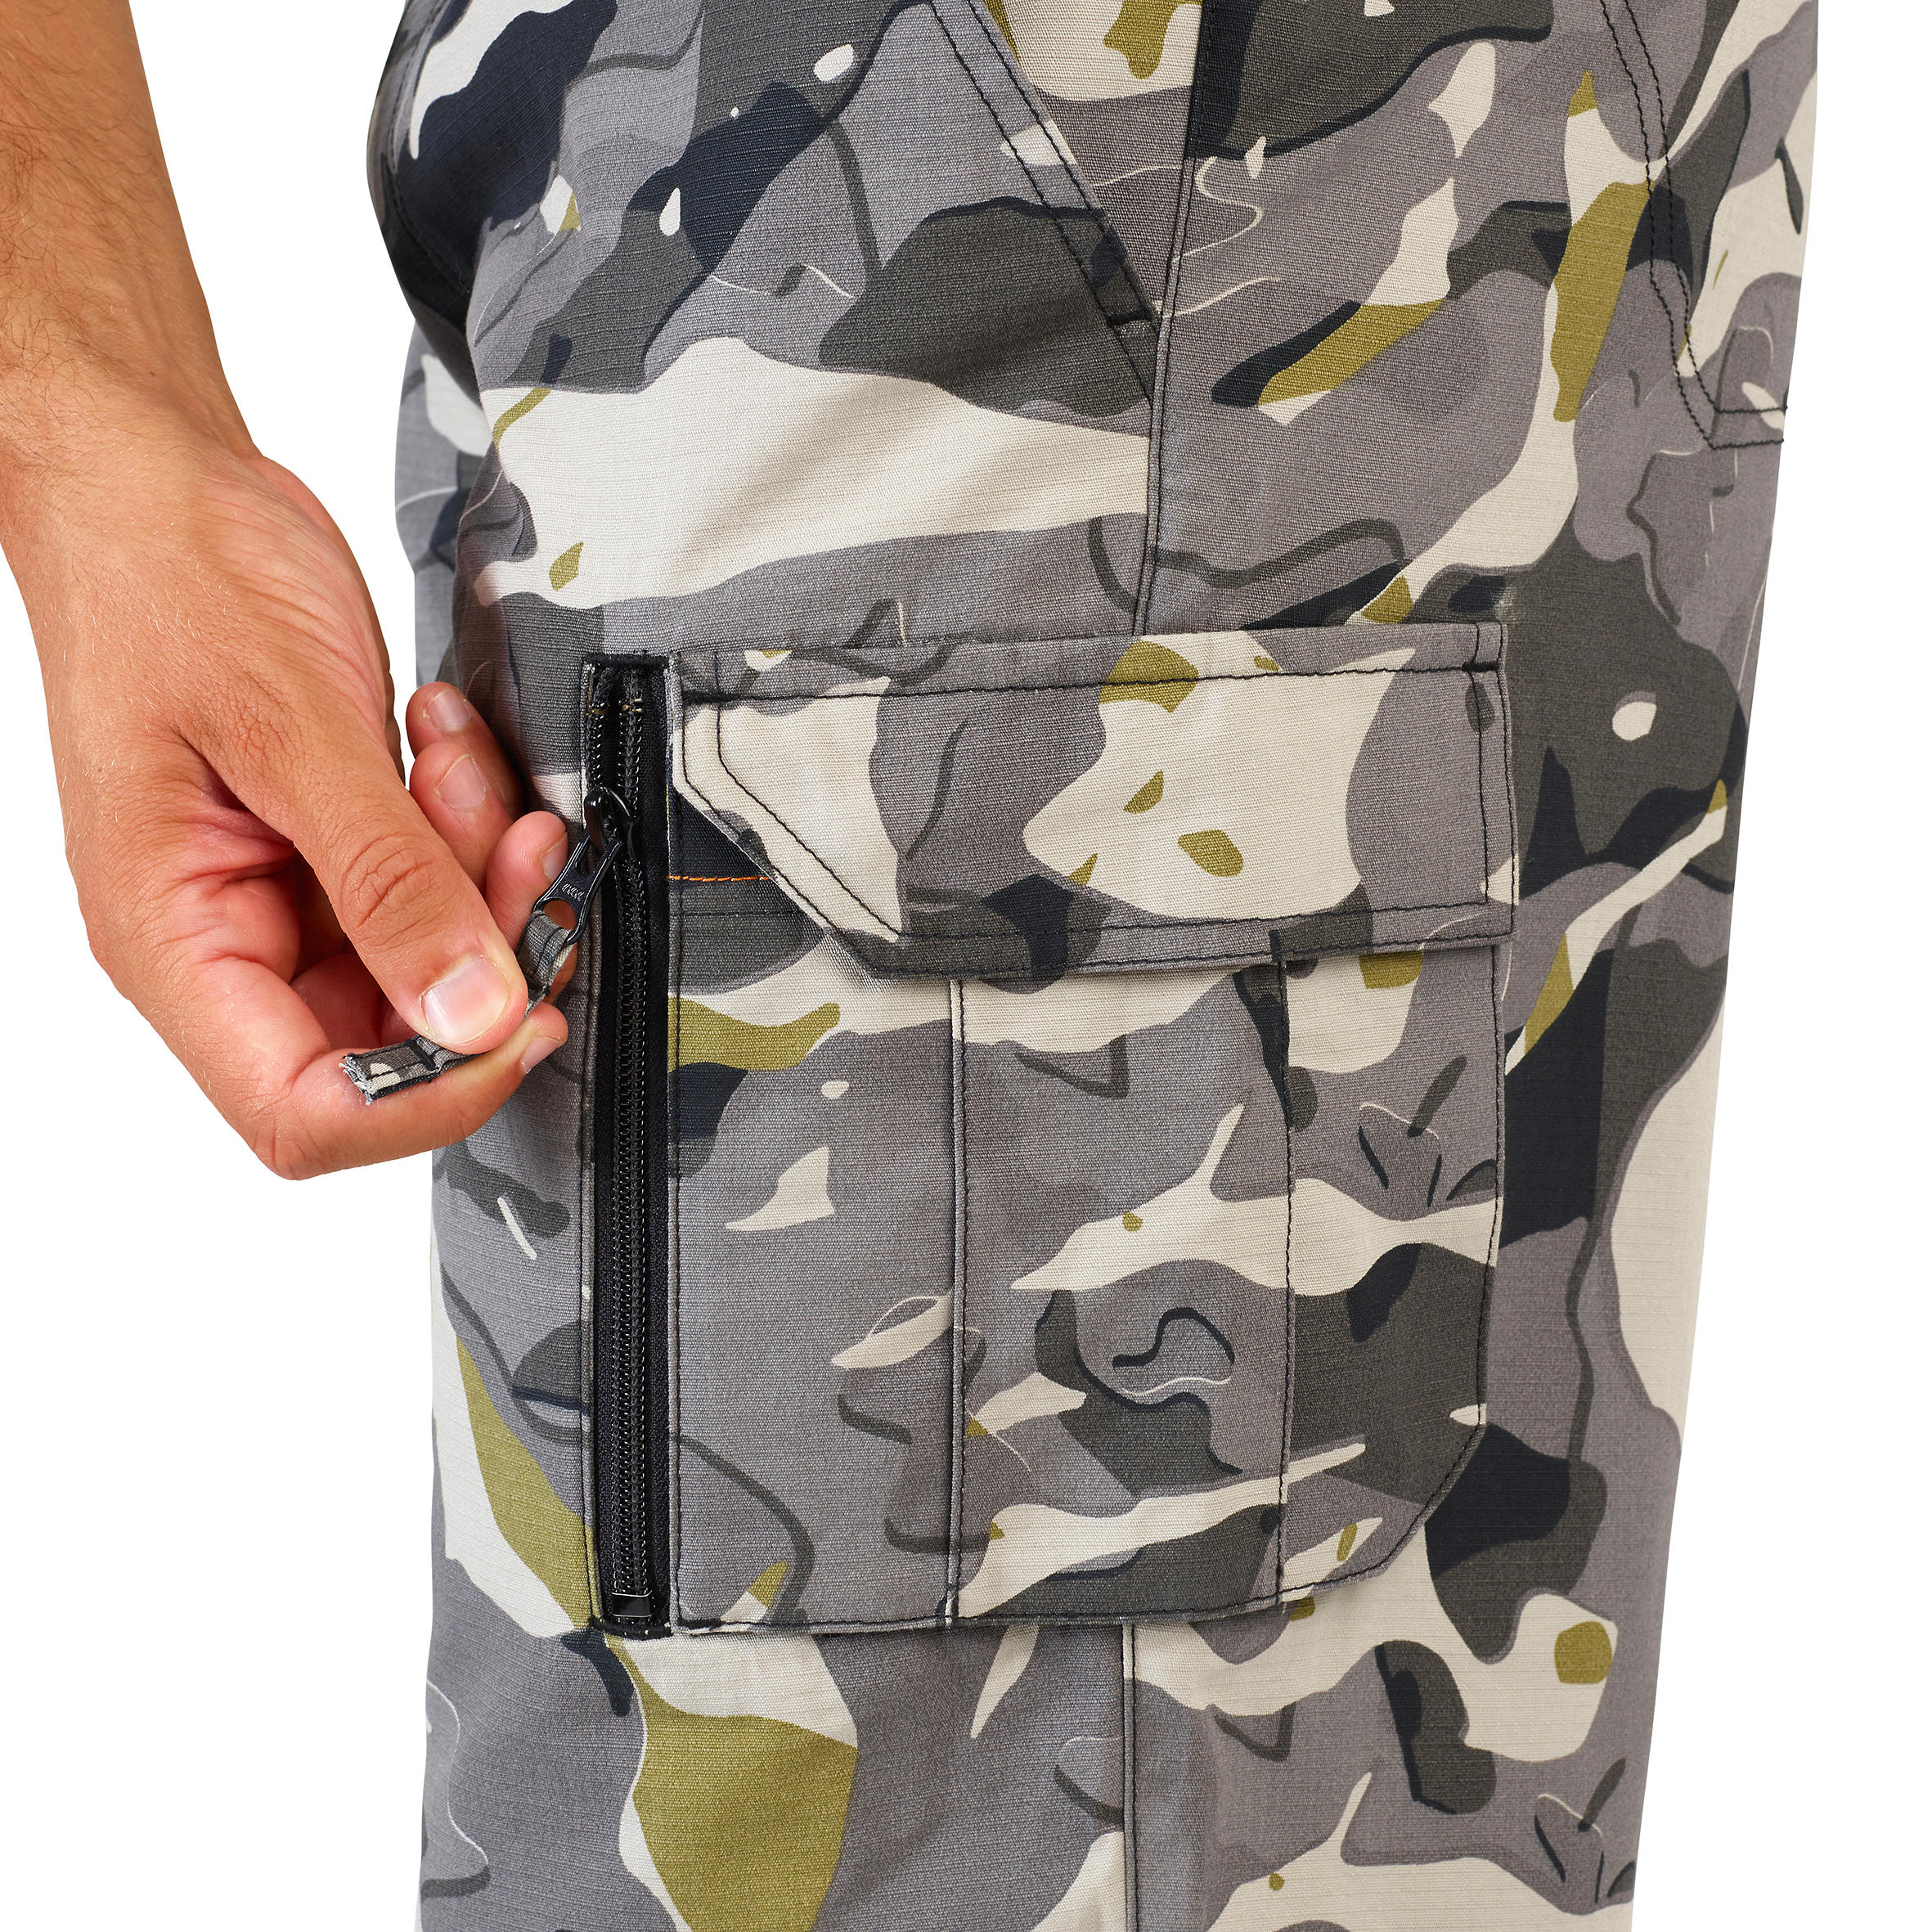 Bermuda shorts 500 - Woodland V1 mineral grey LTD camouflage 11/13